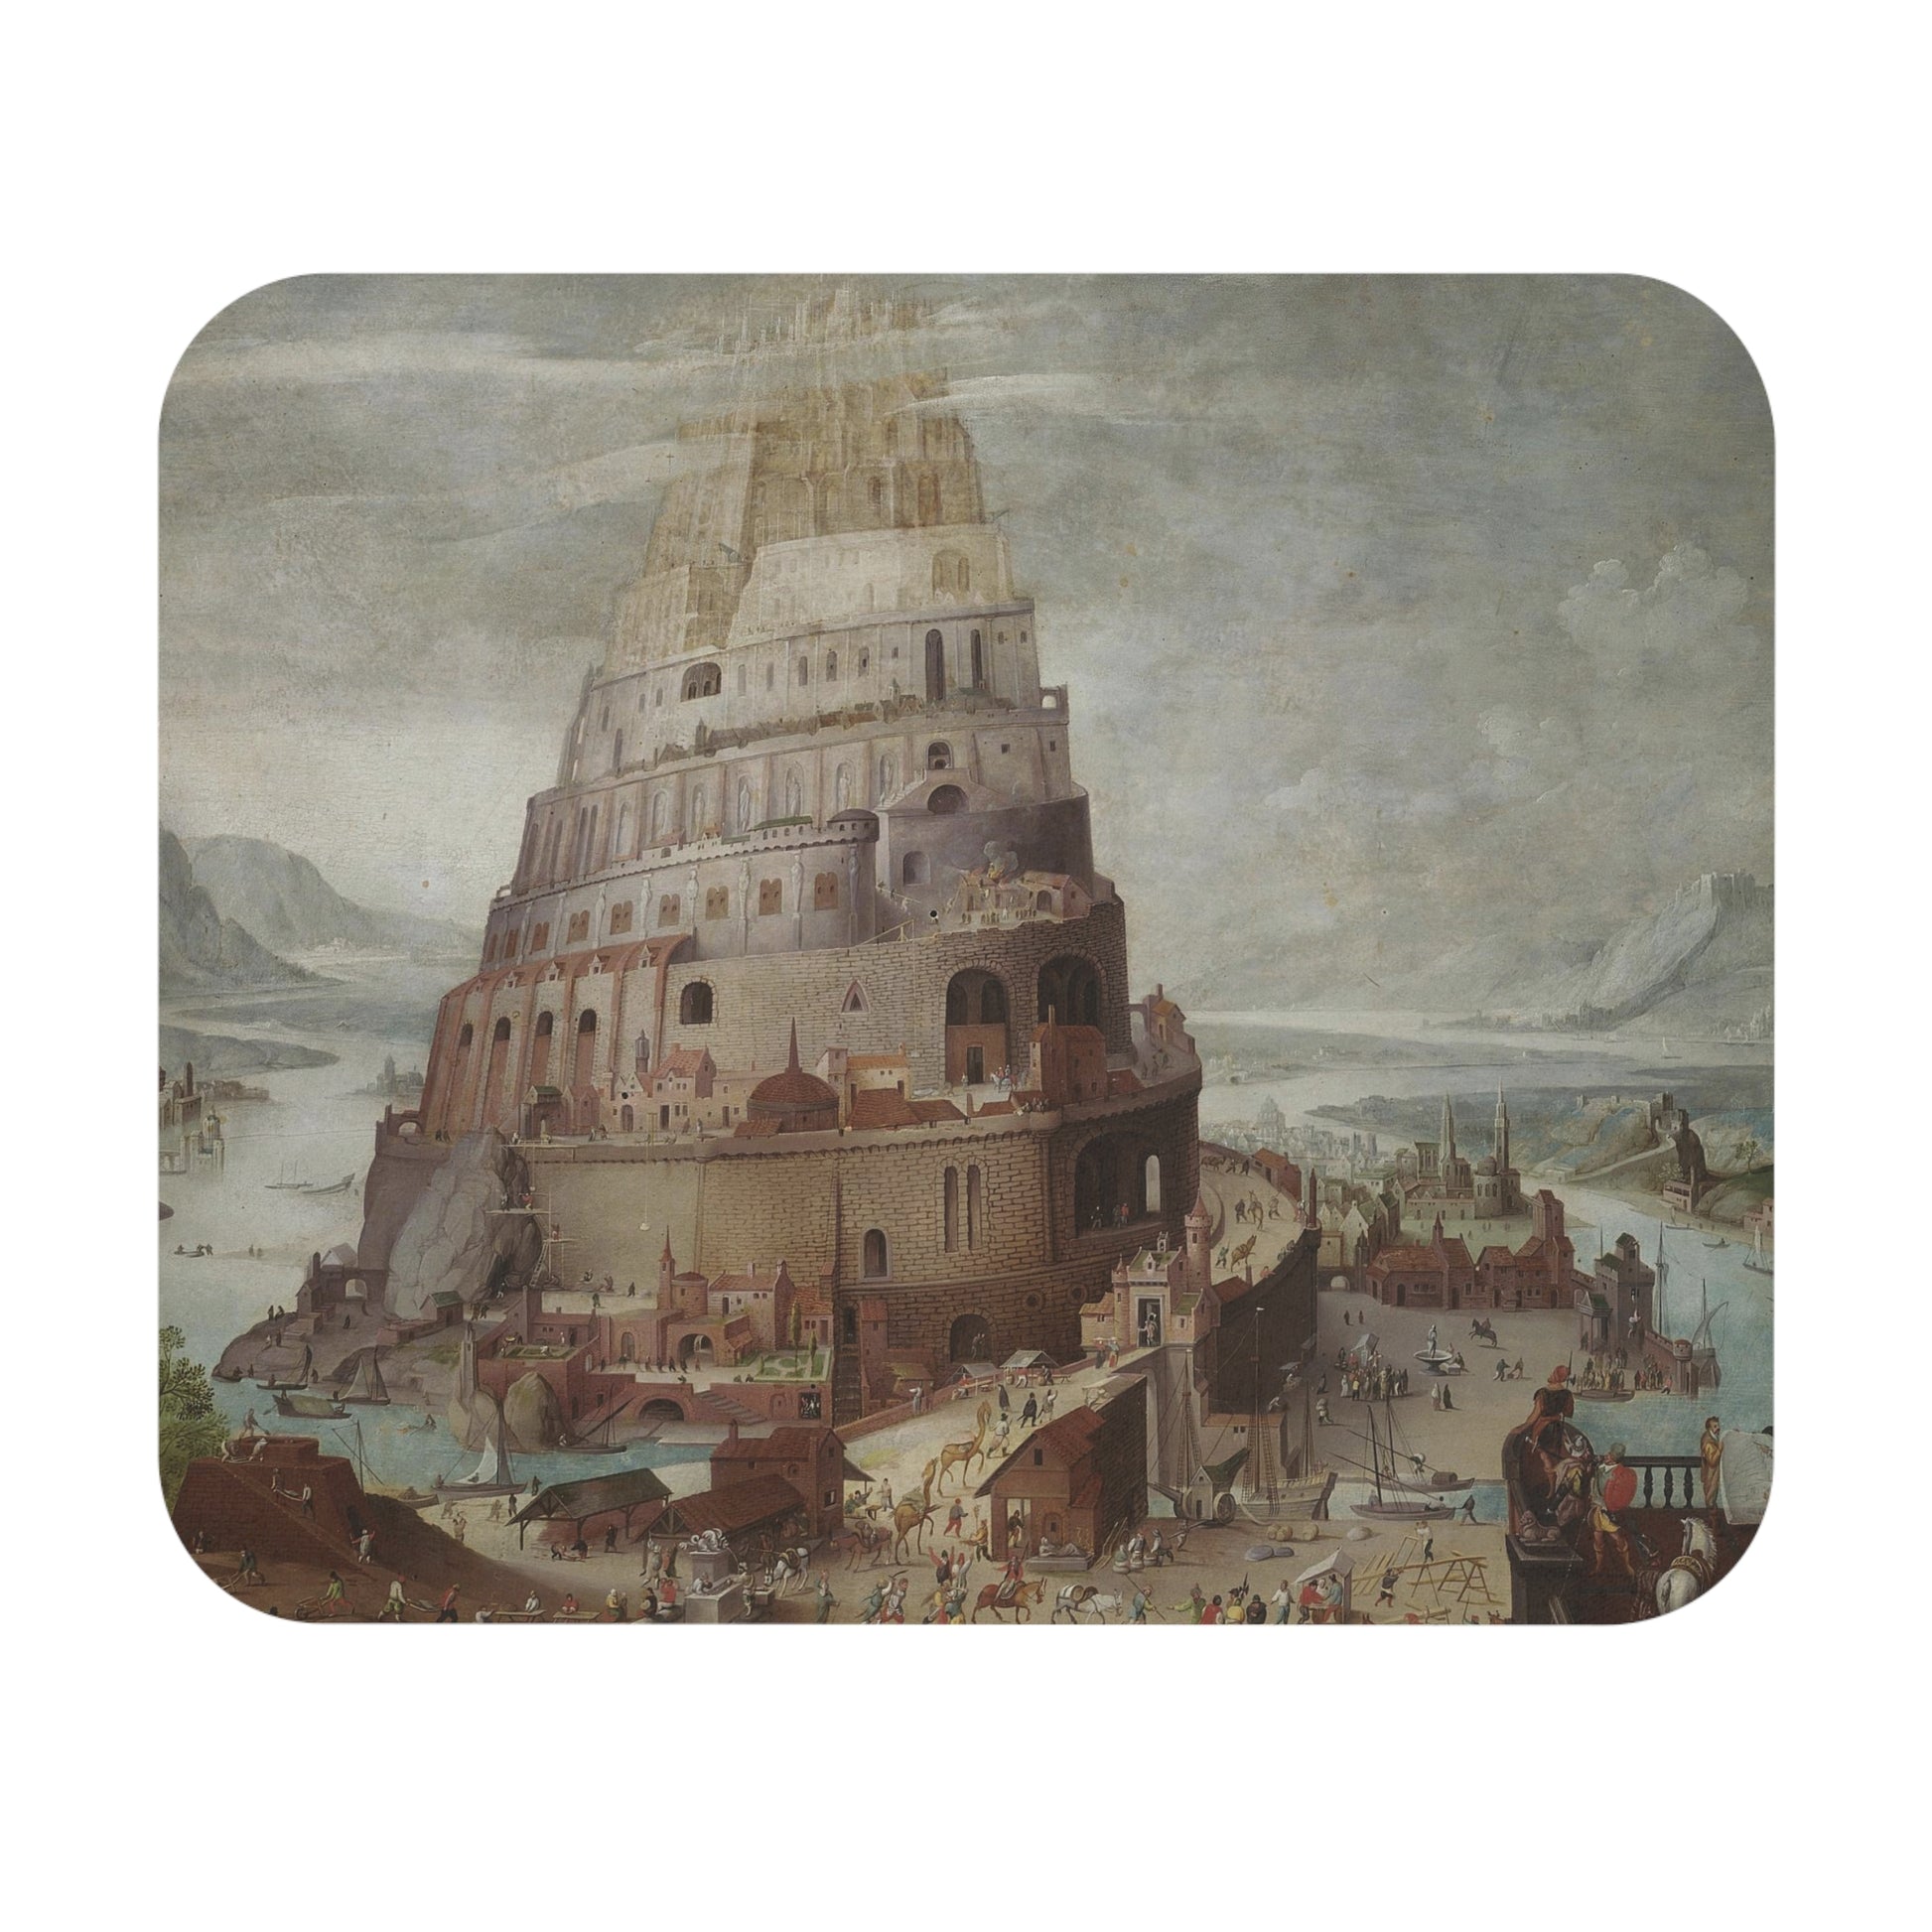 PETER BRUEGEL - CONSTRUCTION OF BABYLON TOWER - ART MOUSE PAD